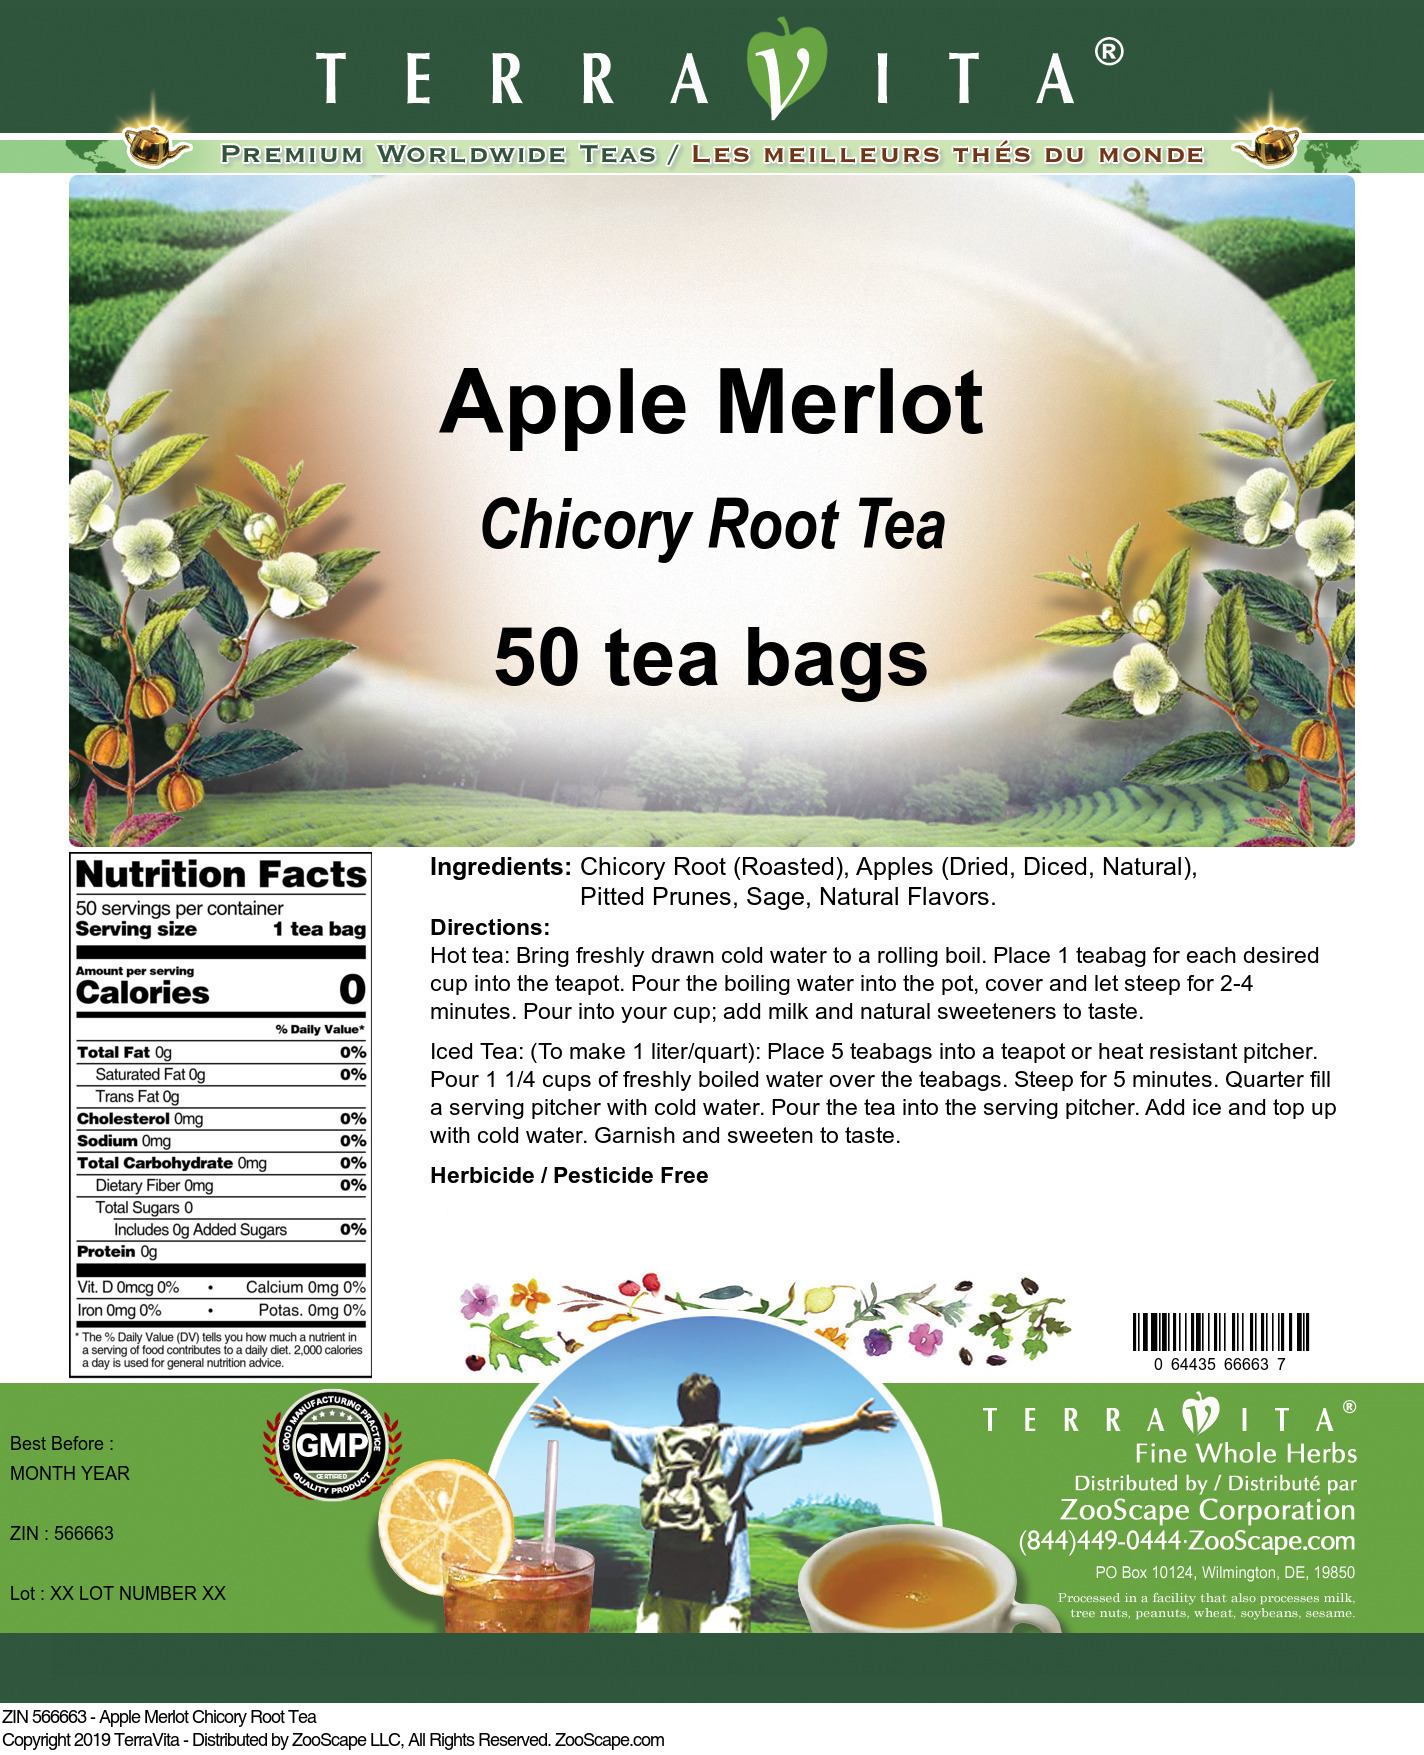 Apple Merlot Chicory Root Tea - Label